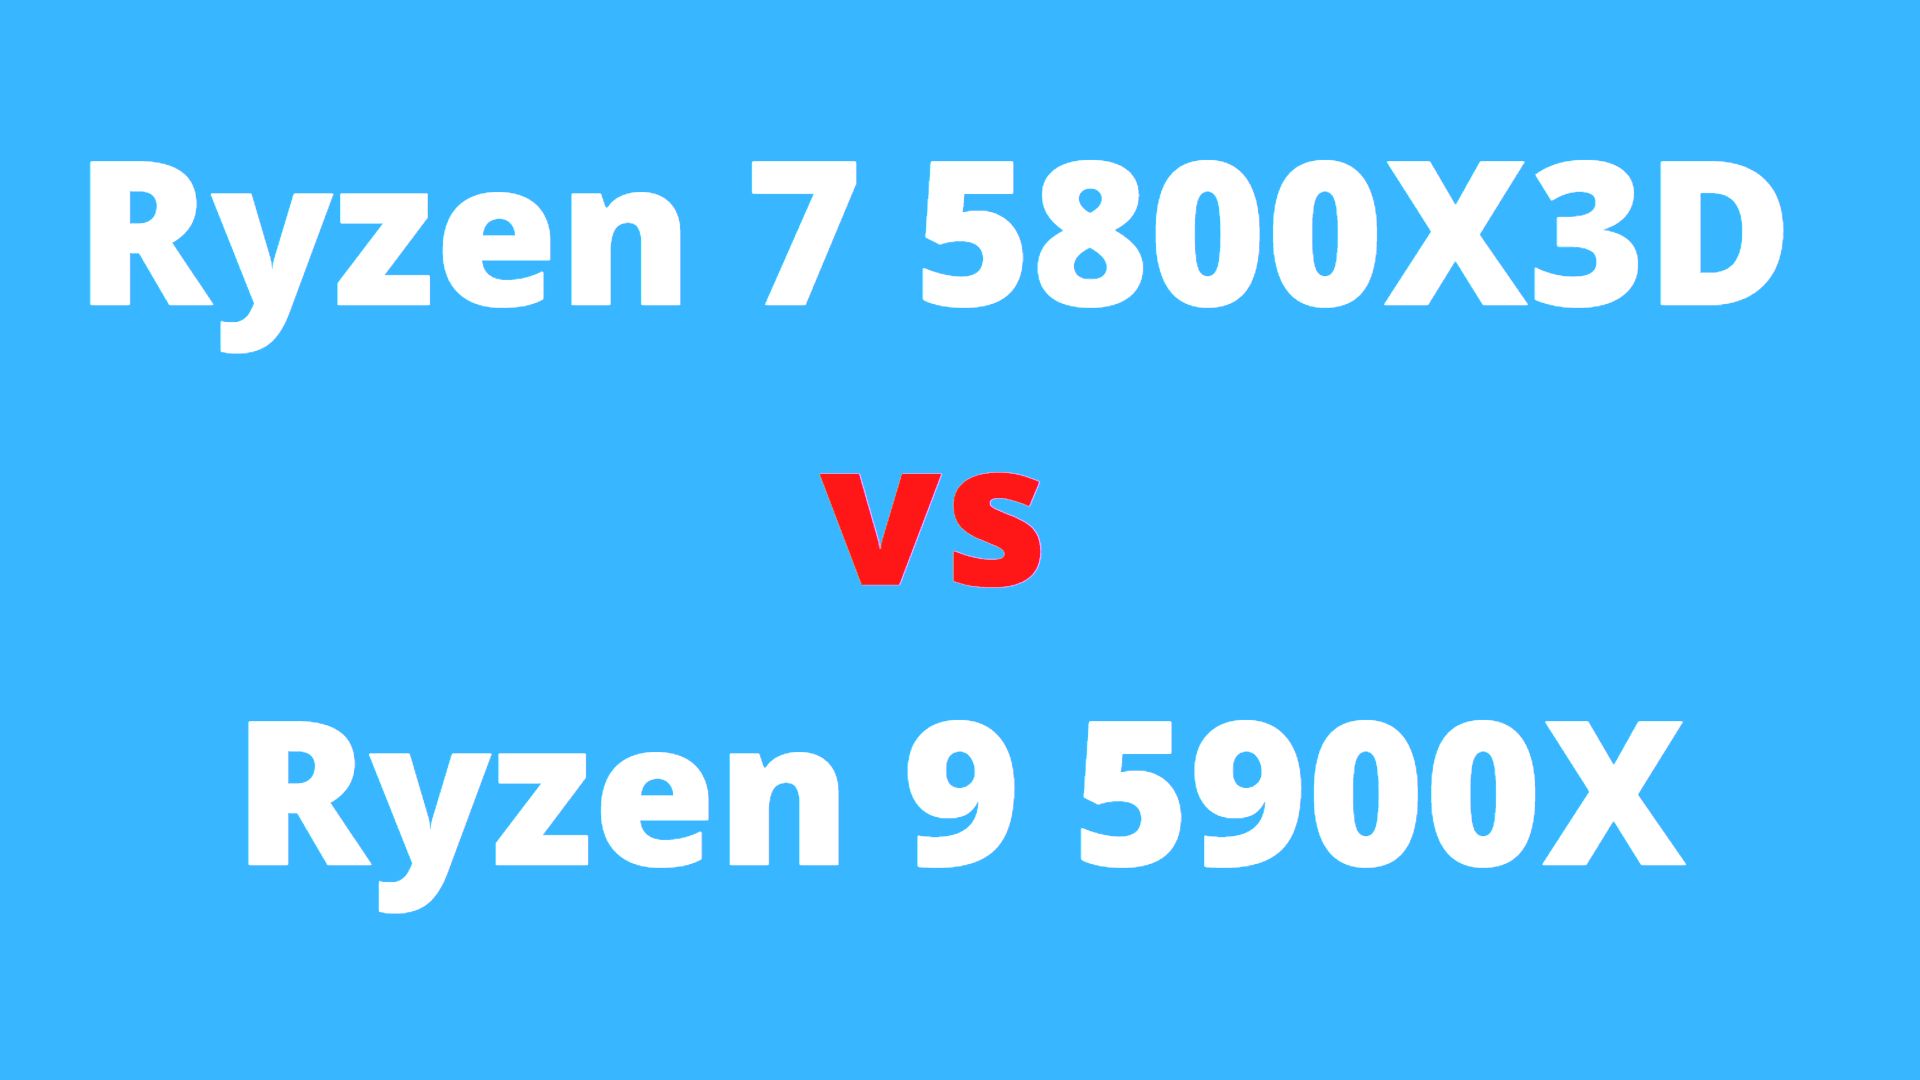 AMD Ryzen 9 5900X 3,7 GHz